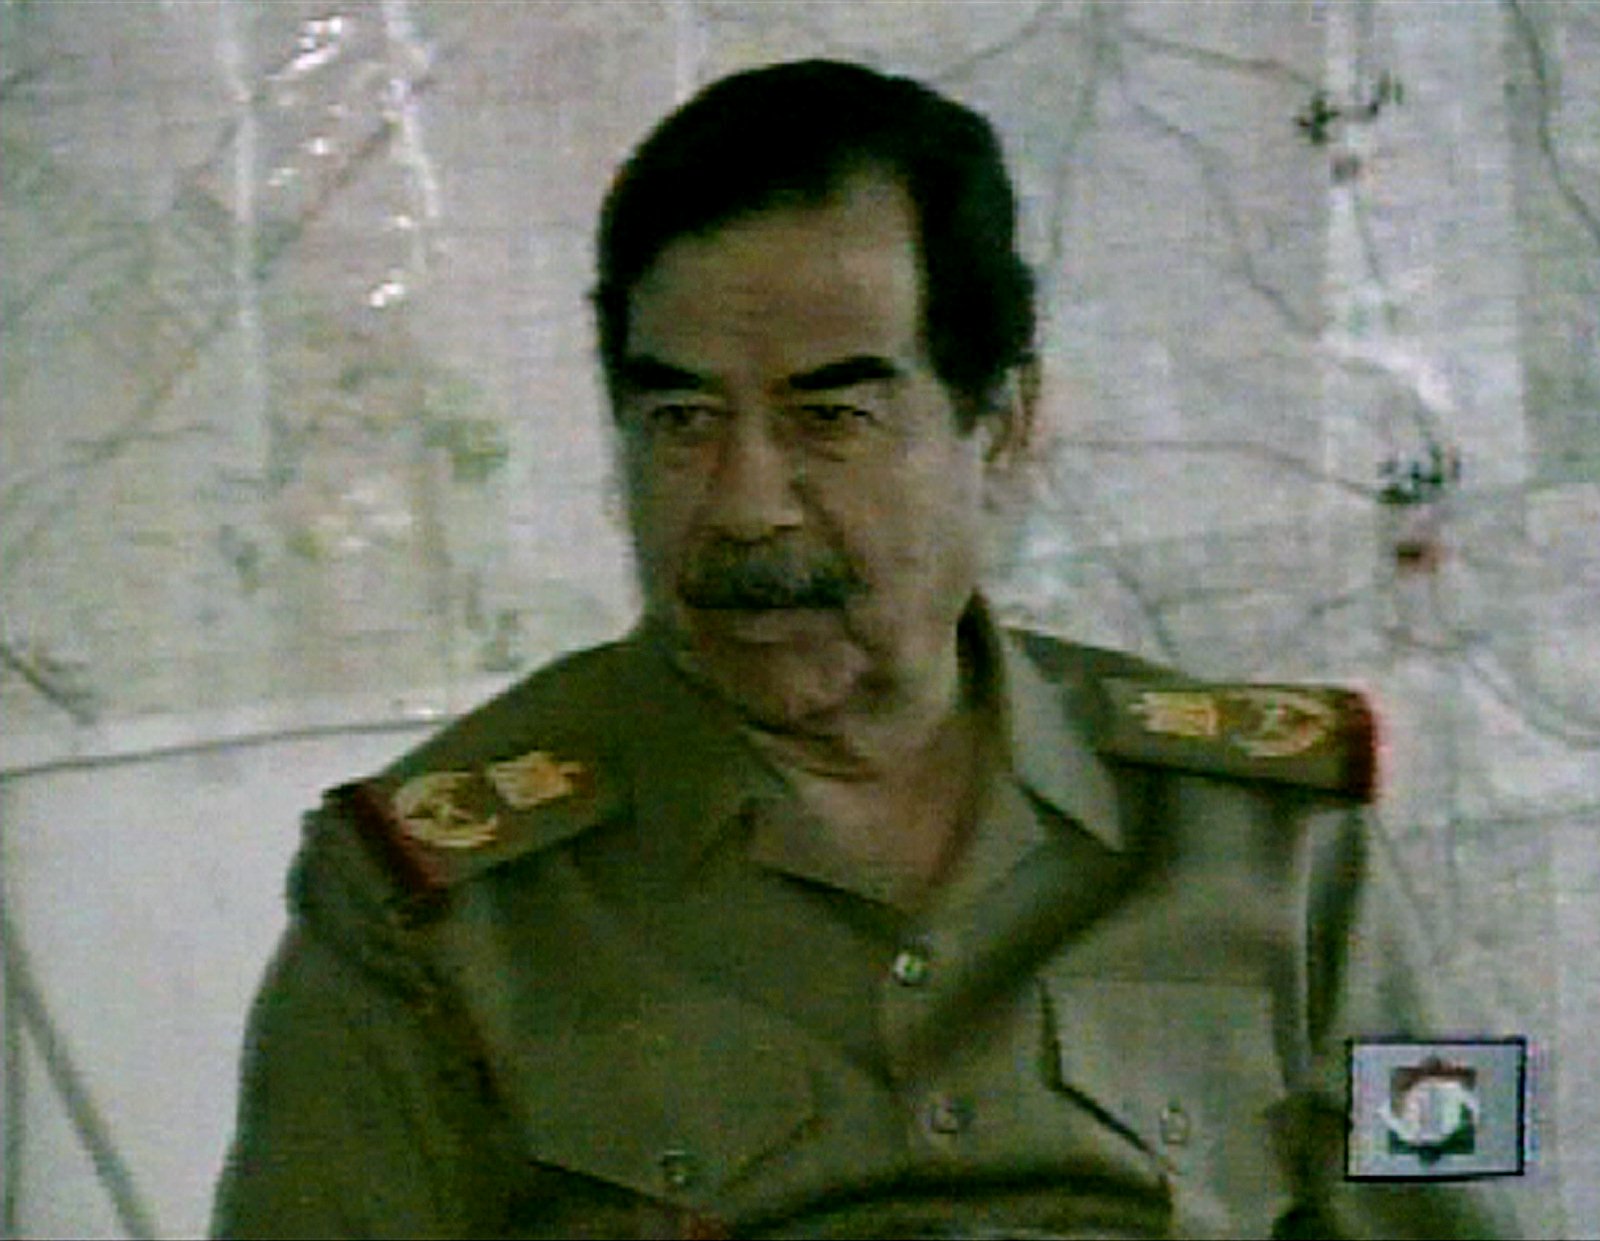 Saddam Hussein 